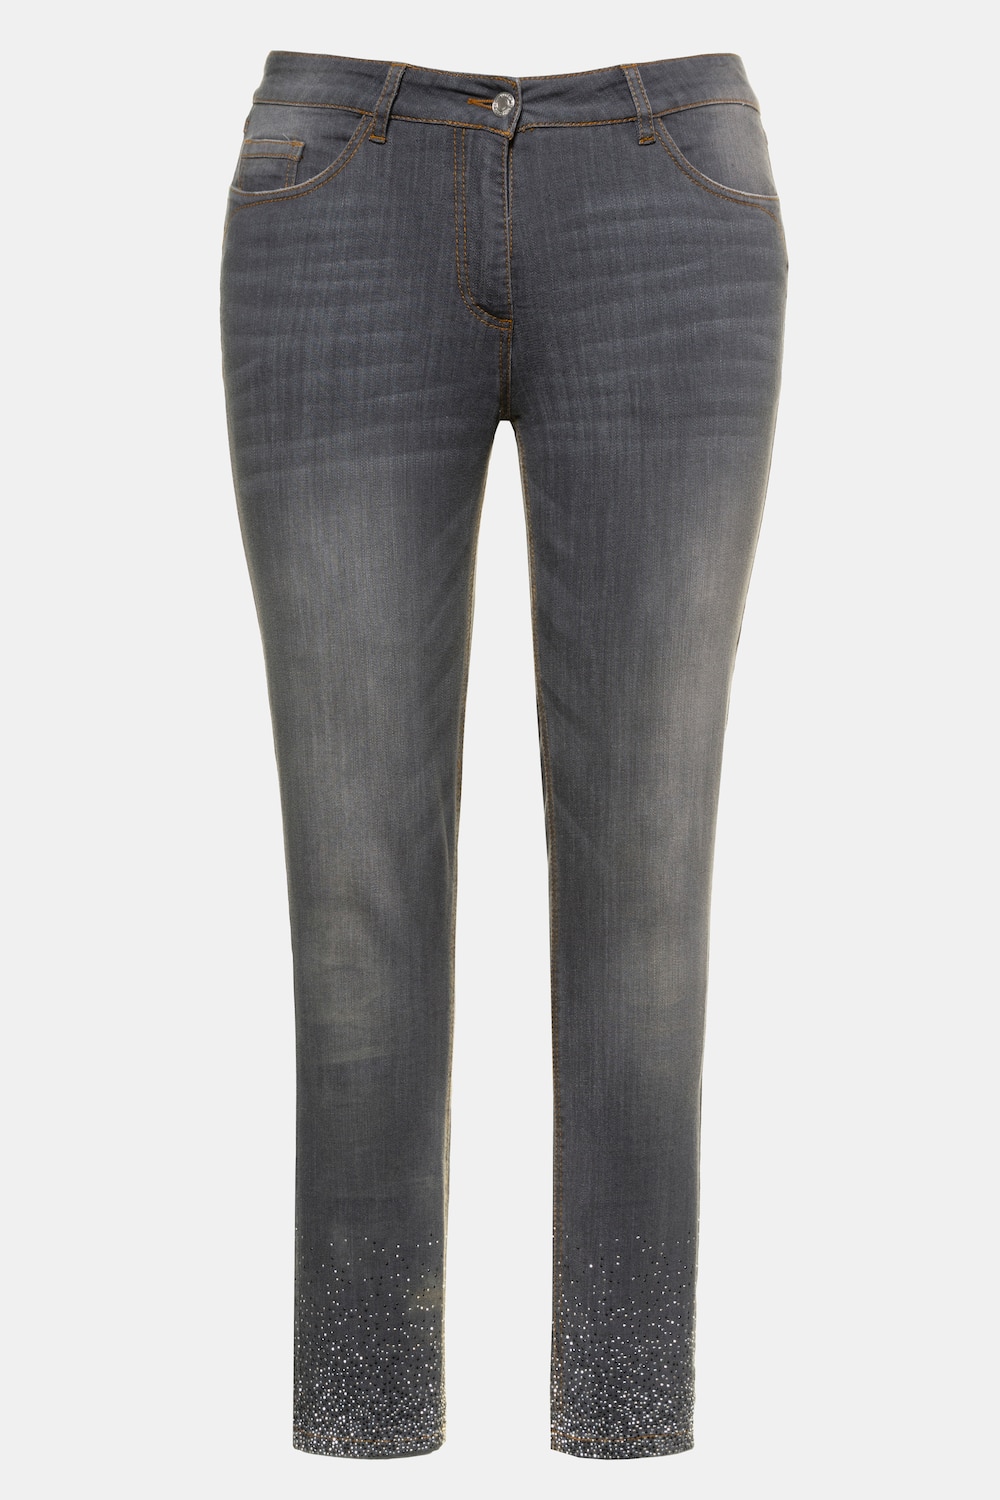 Grote Maten jeans Sarah, Dames, grijs, Maat: 112, Katoen/Polyester/Viscose, Ulla Popken